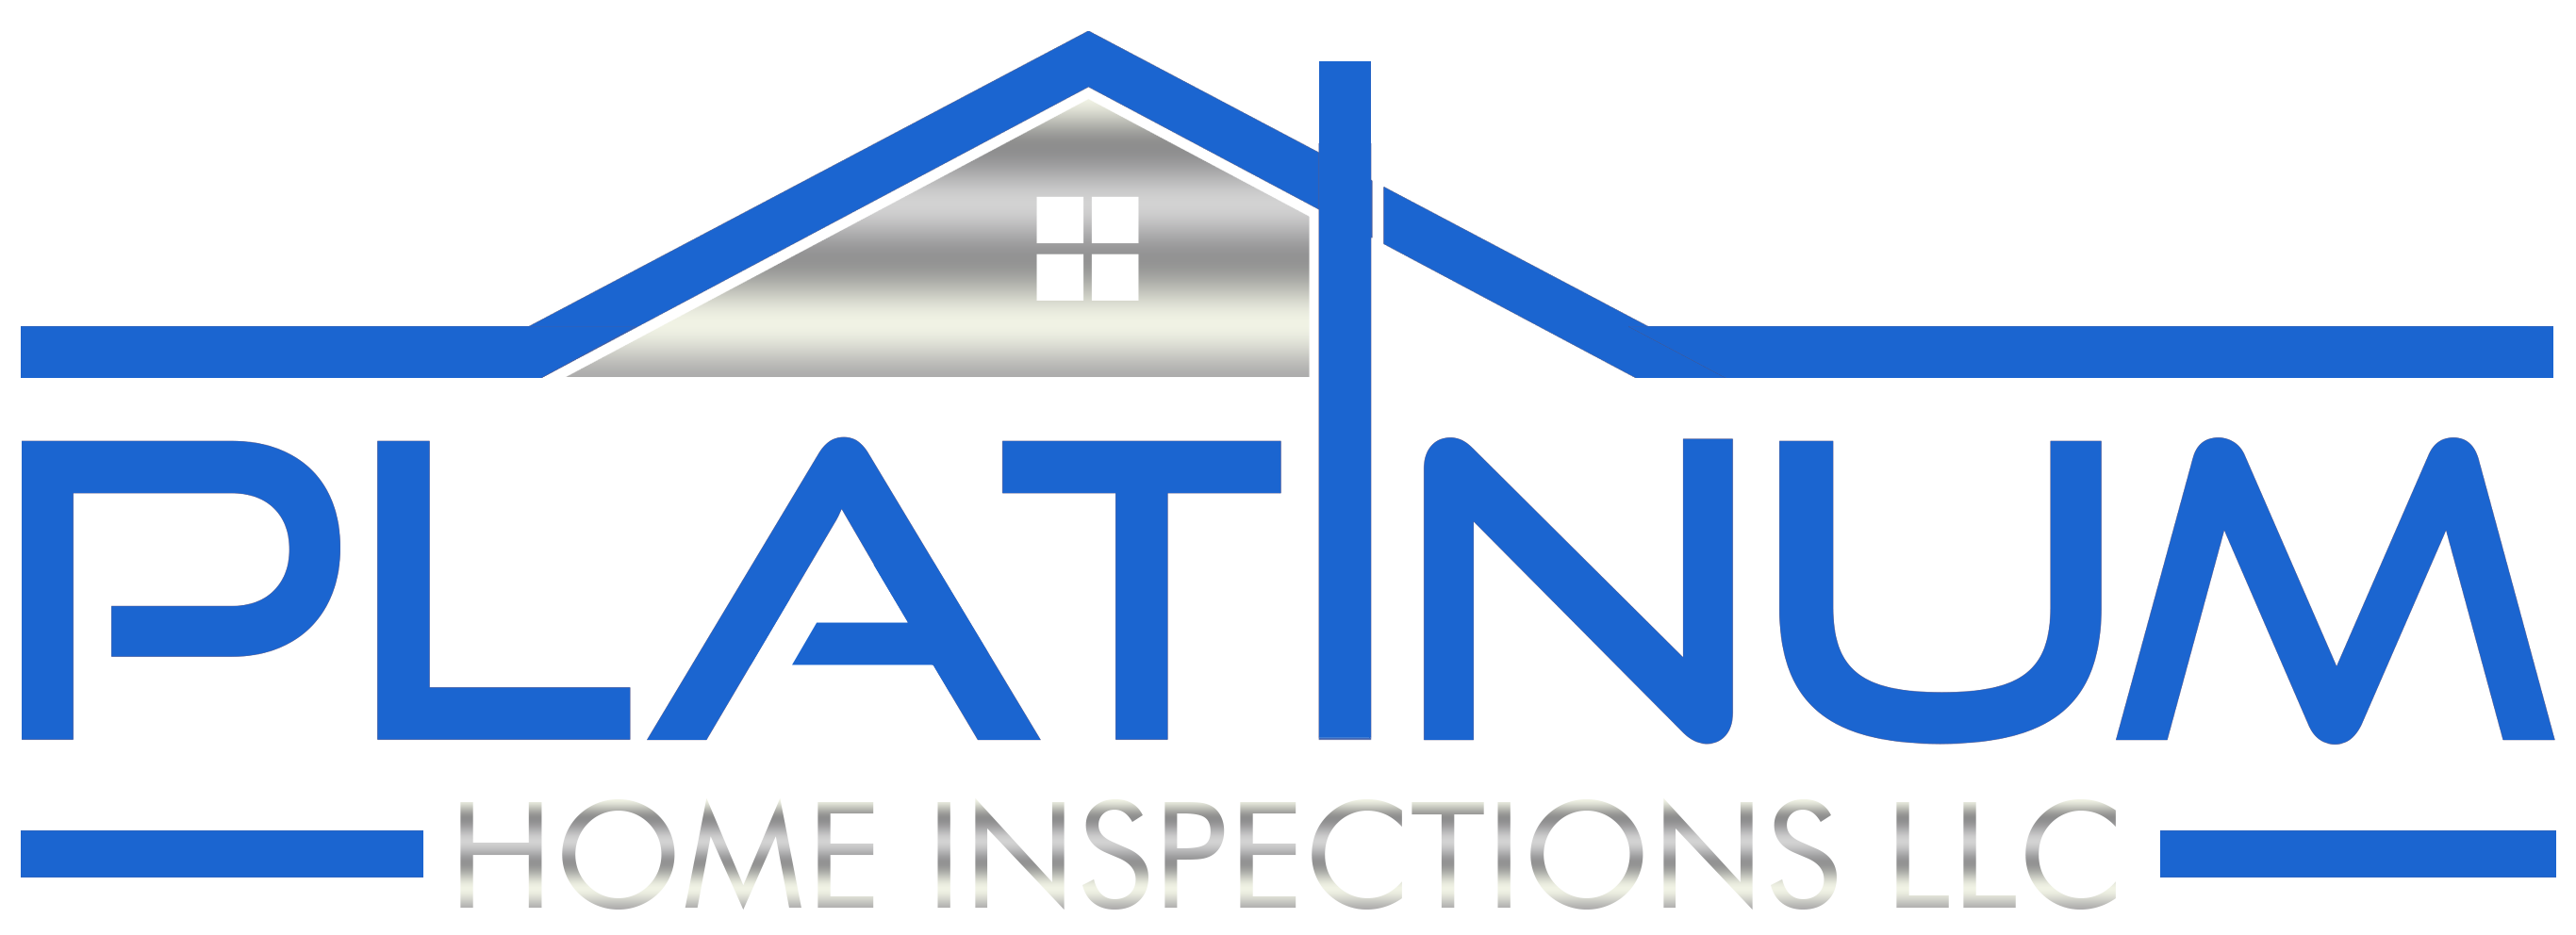 Platinum Home inspection LLC logo